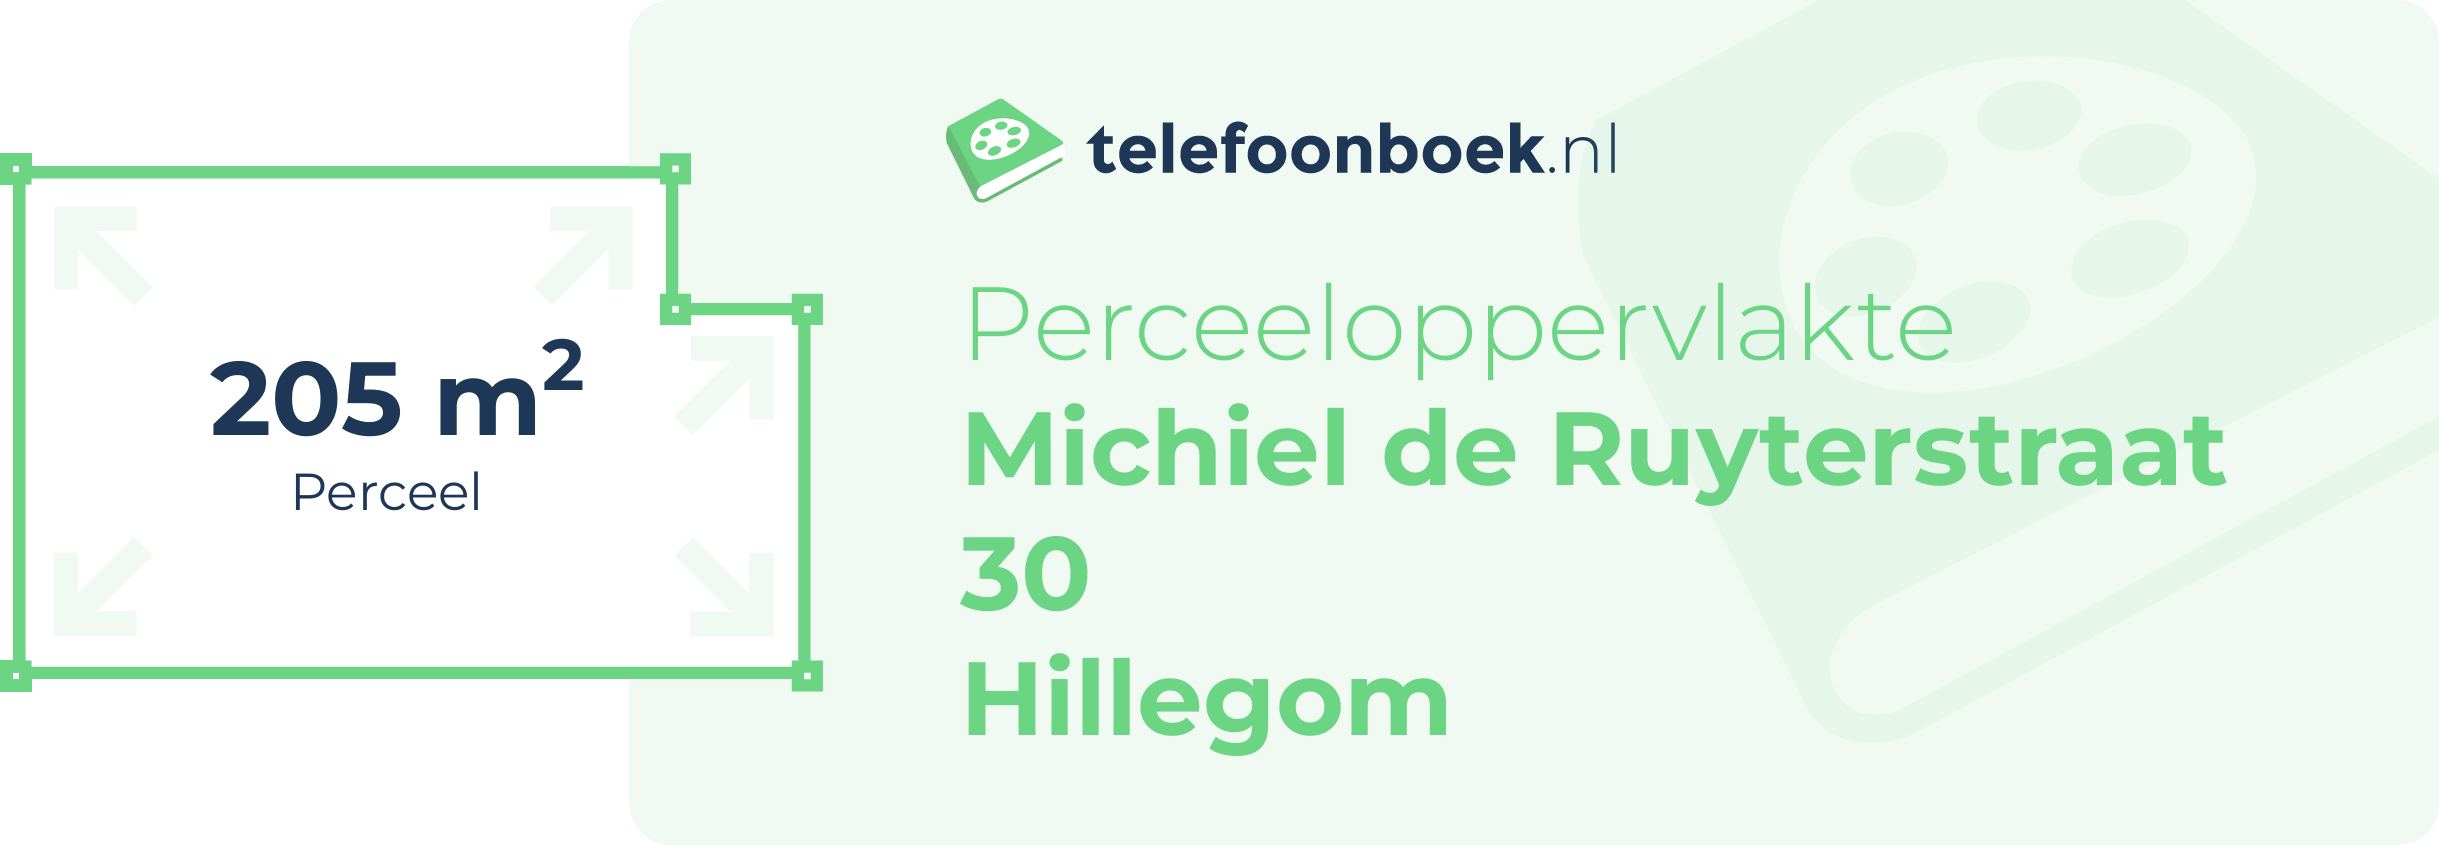 Perceeloppervlakte Michiel De Ruyterstraat 30 Hillegom